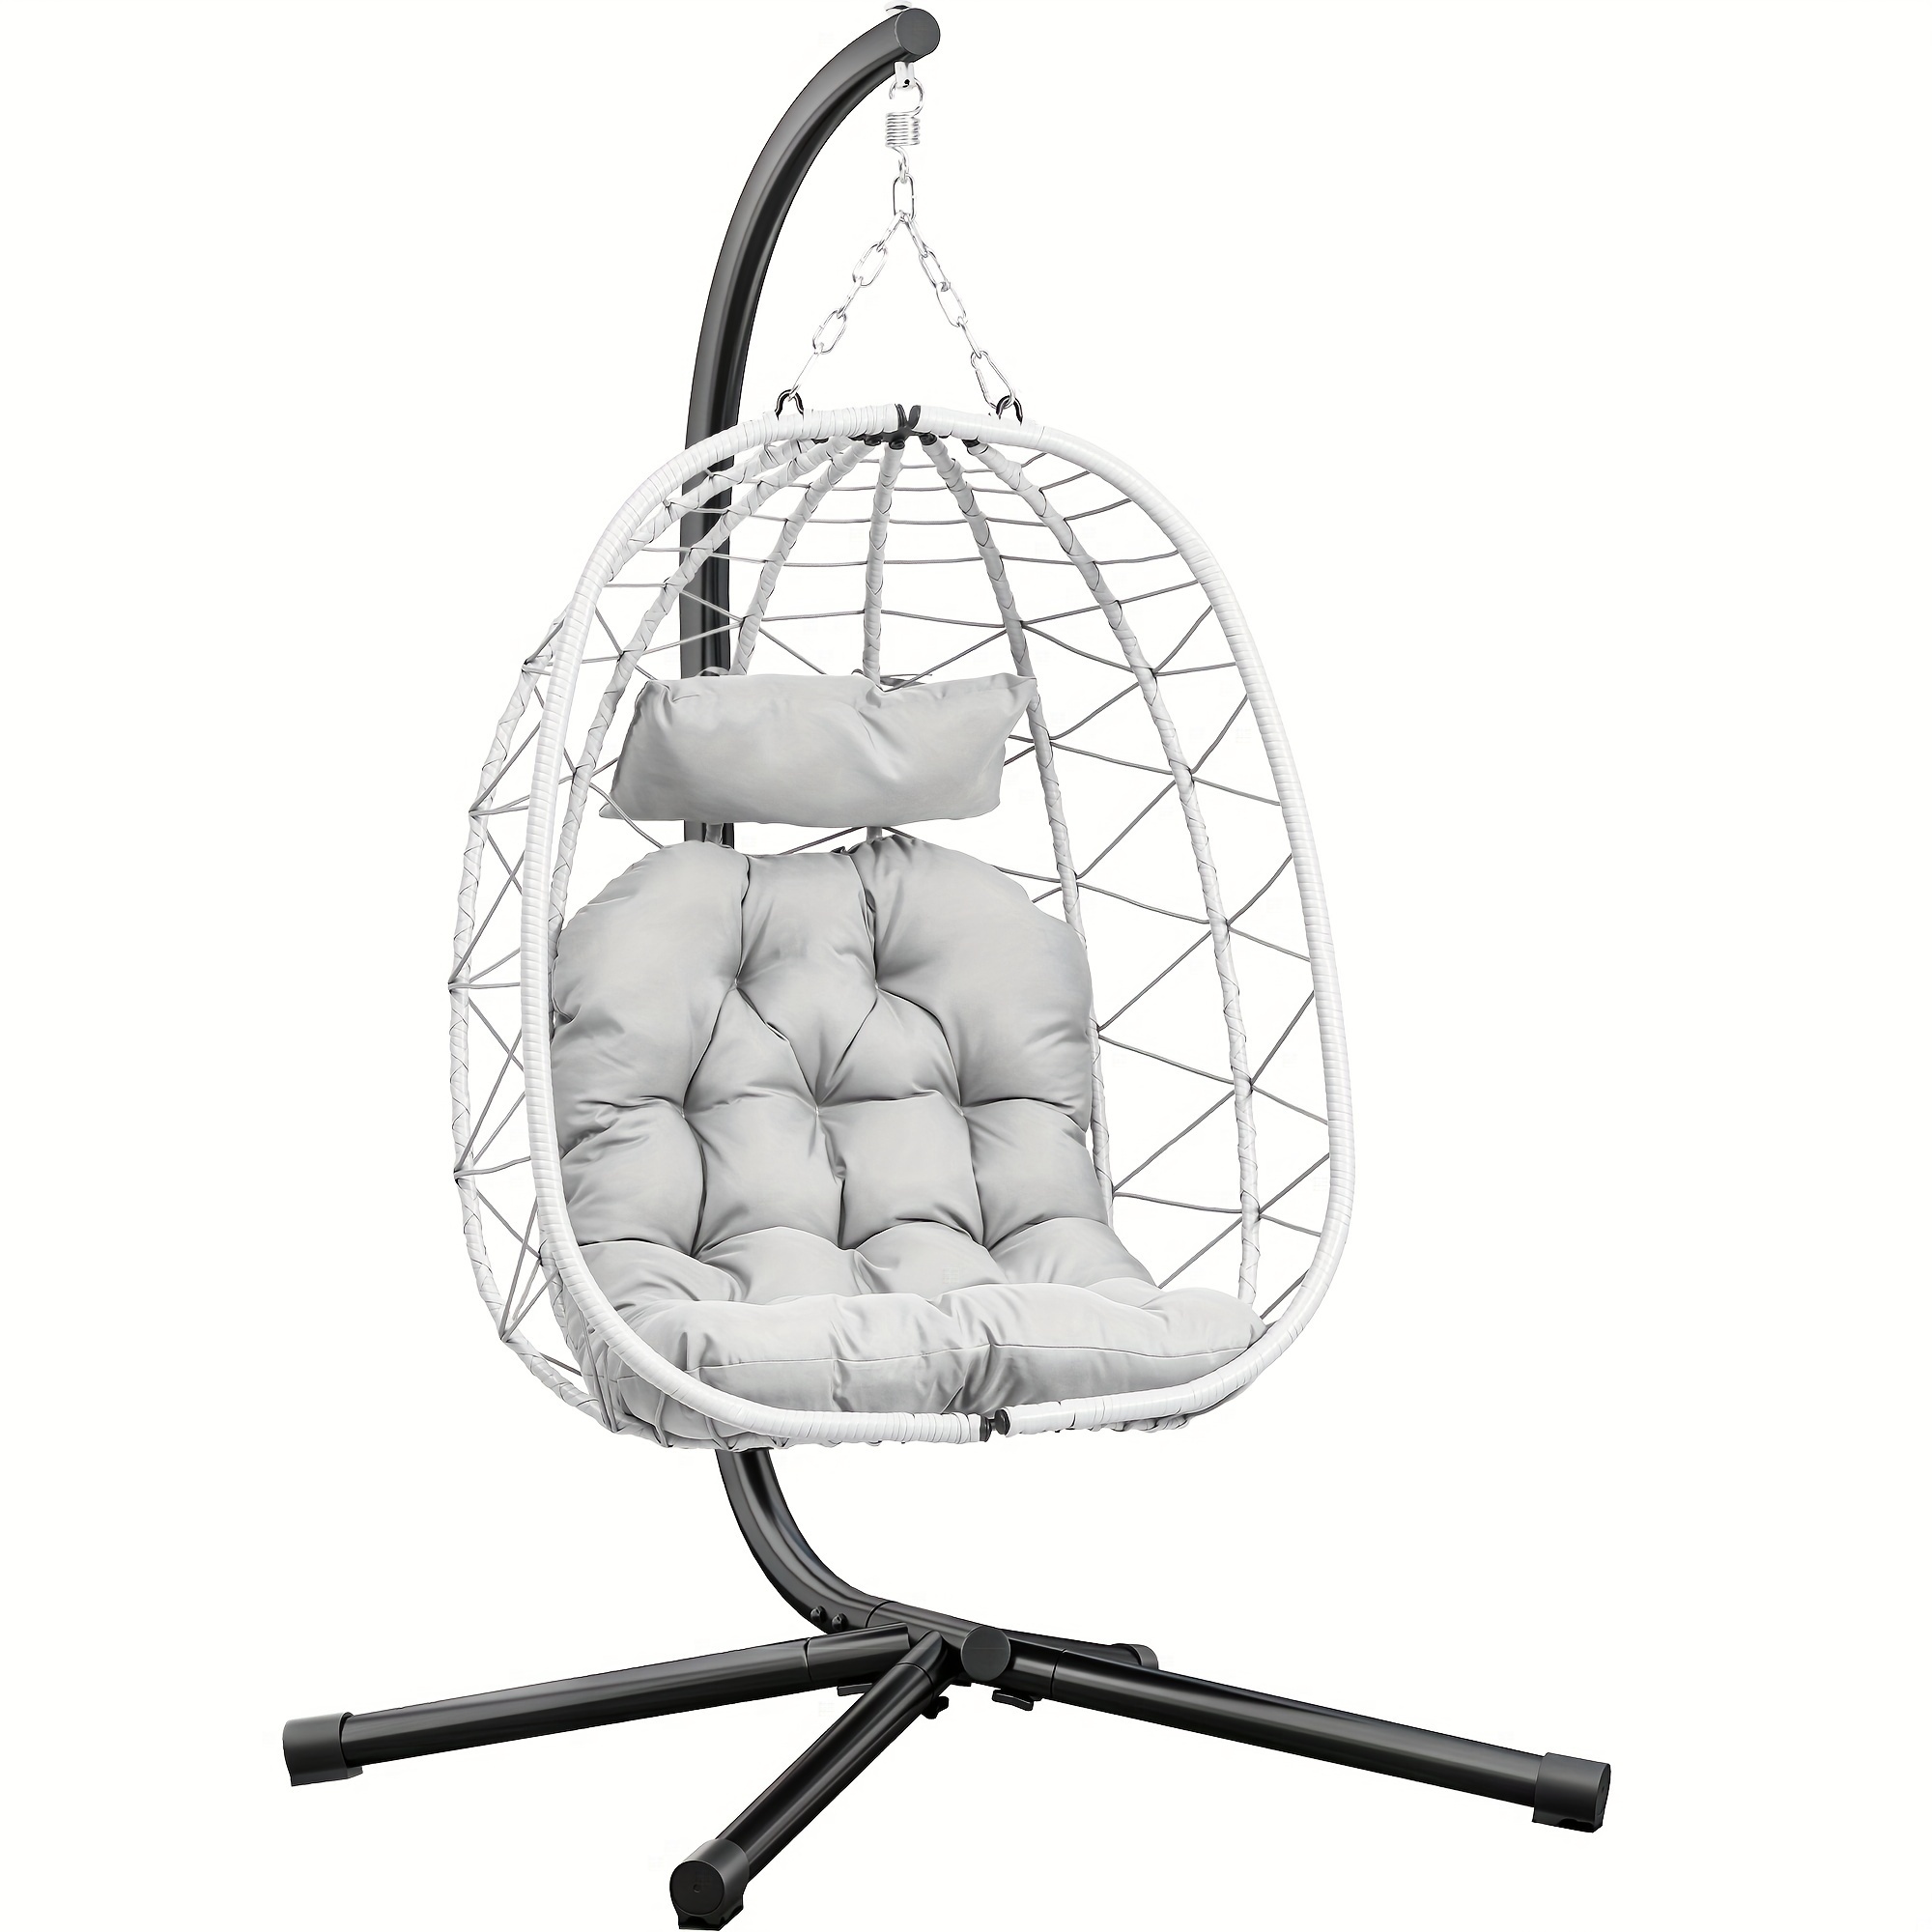 

Cozrex Hanging Wicker Egg Chair W/stand Hammock Swing Chair+cushion For Patio Garden